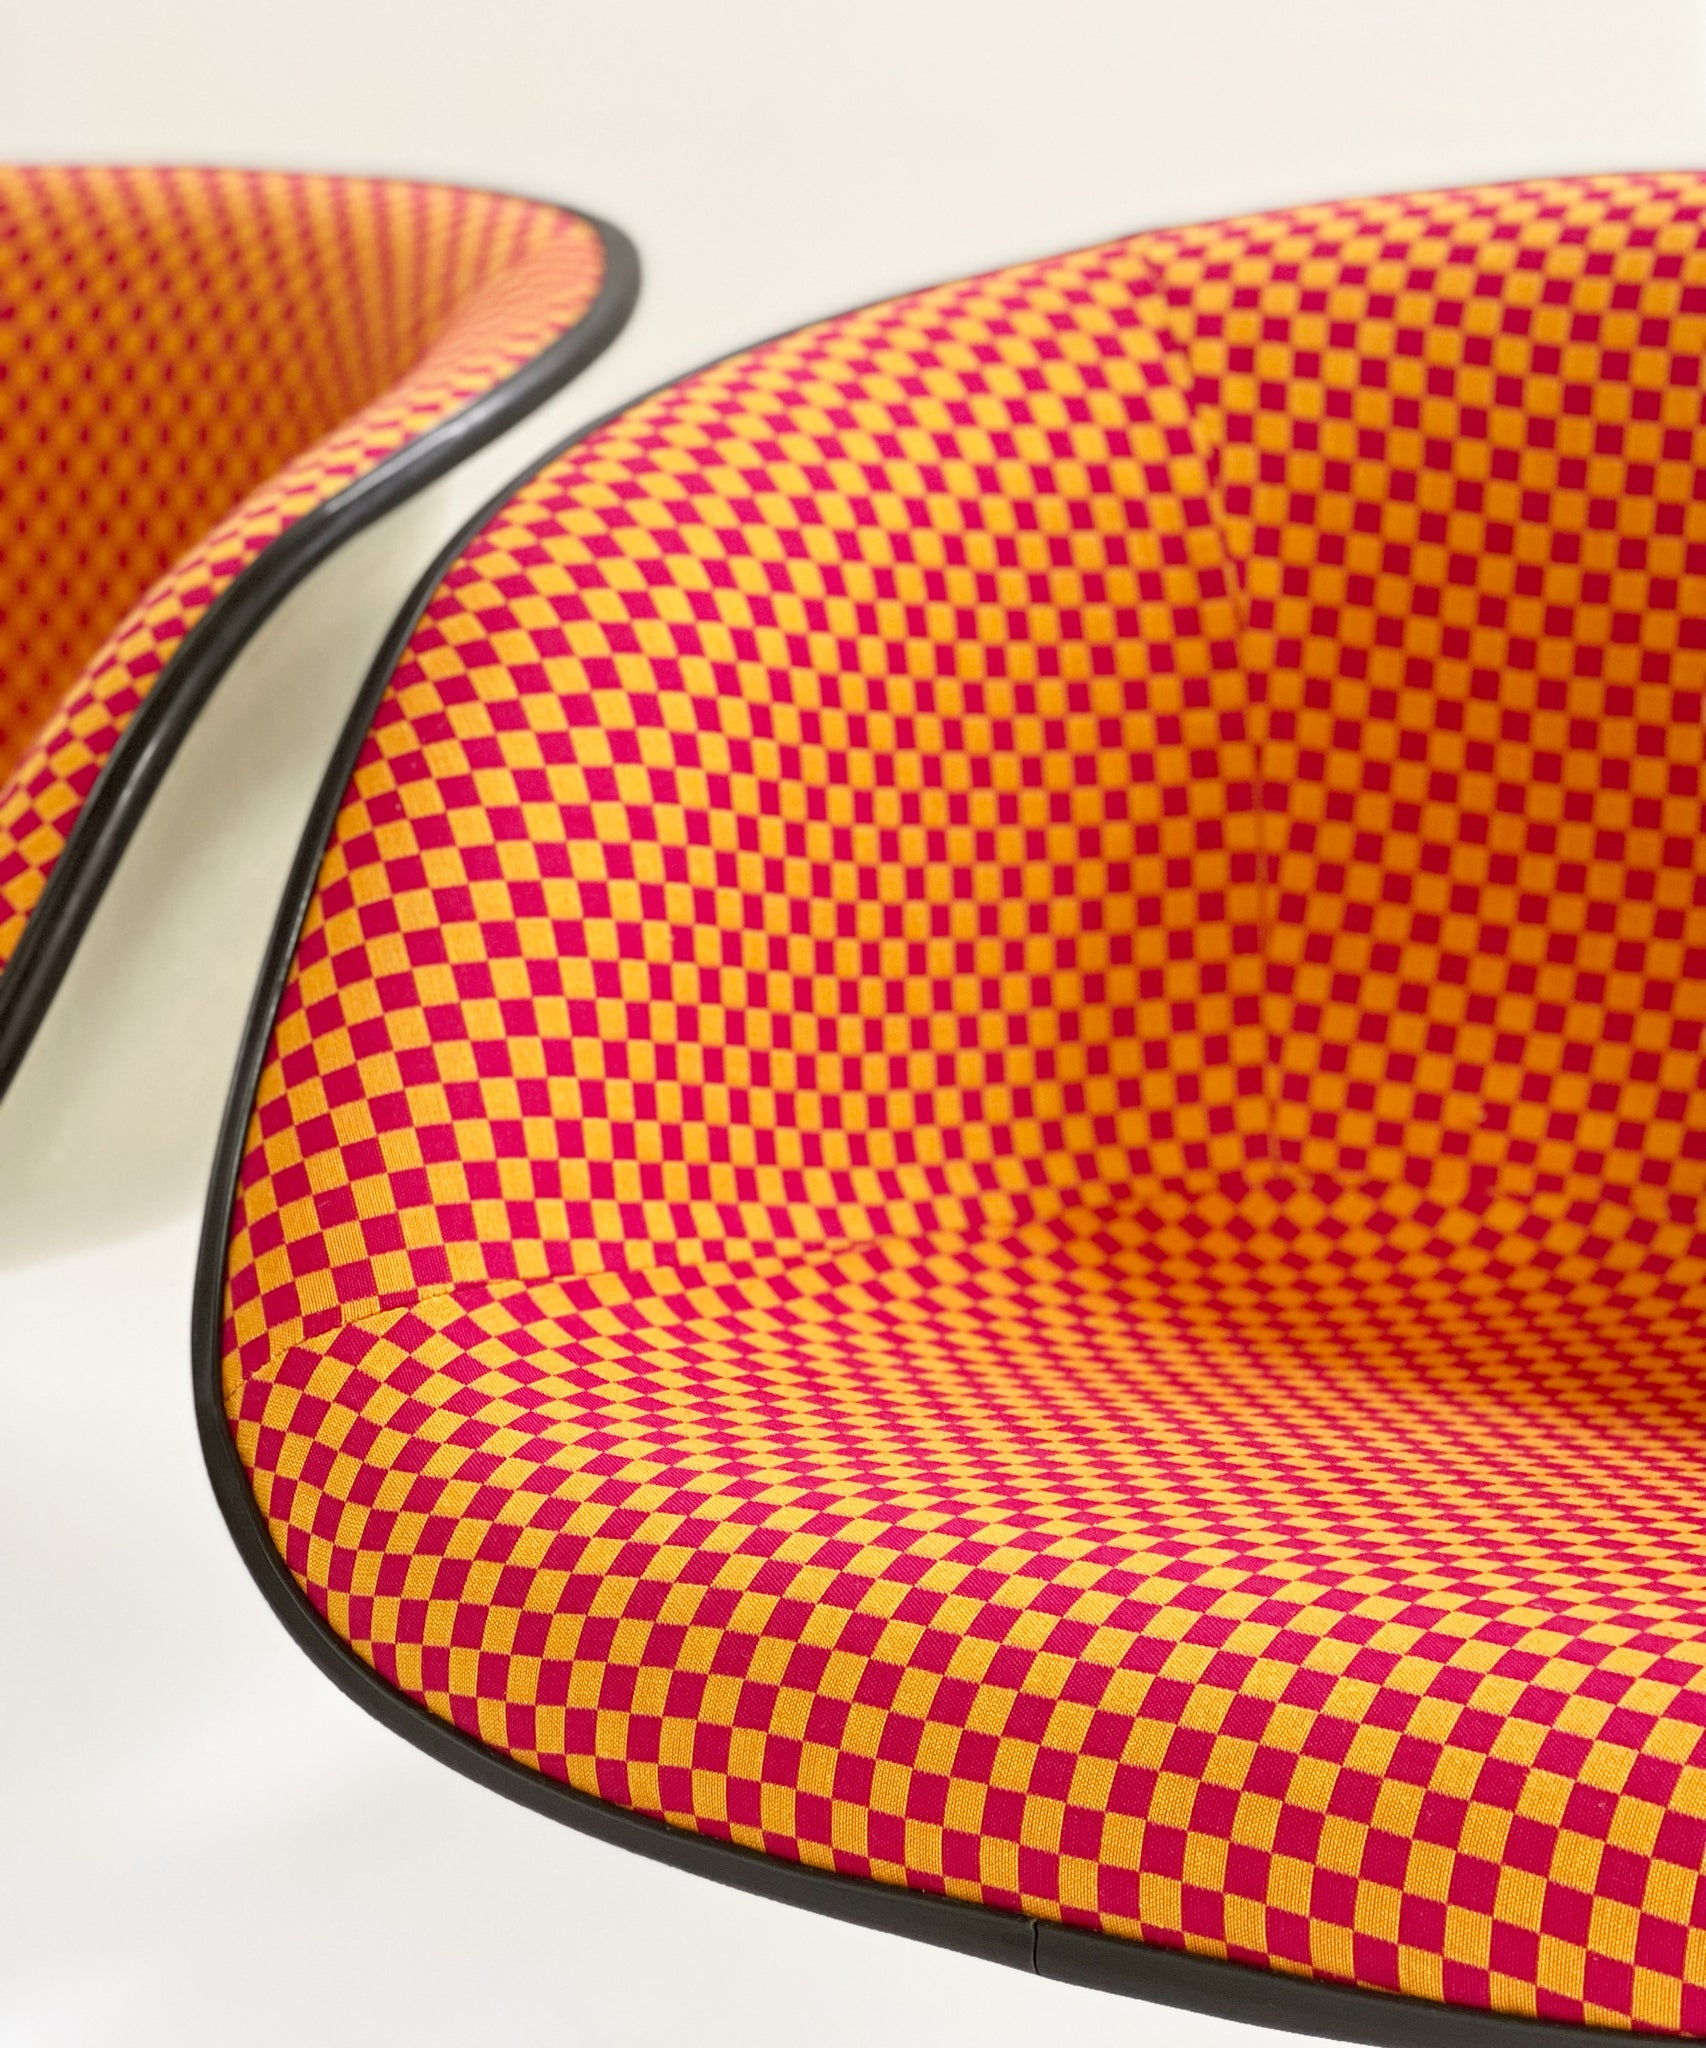 La Fonda Chairs in Alexander Girard Checker Fabric, Pair